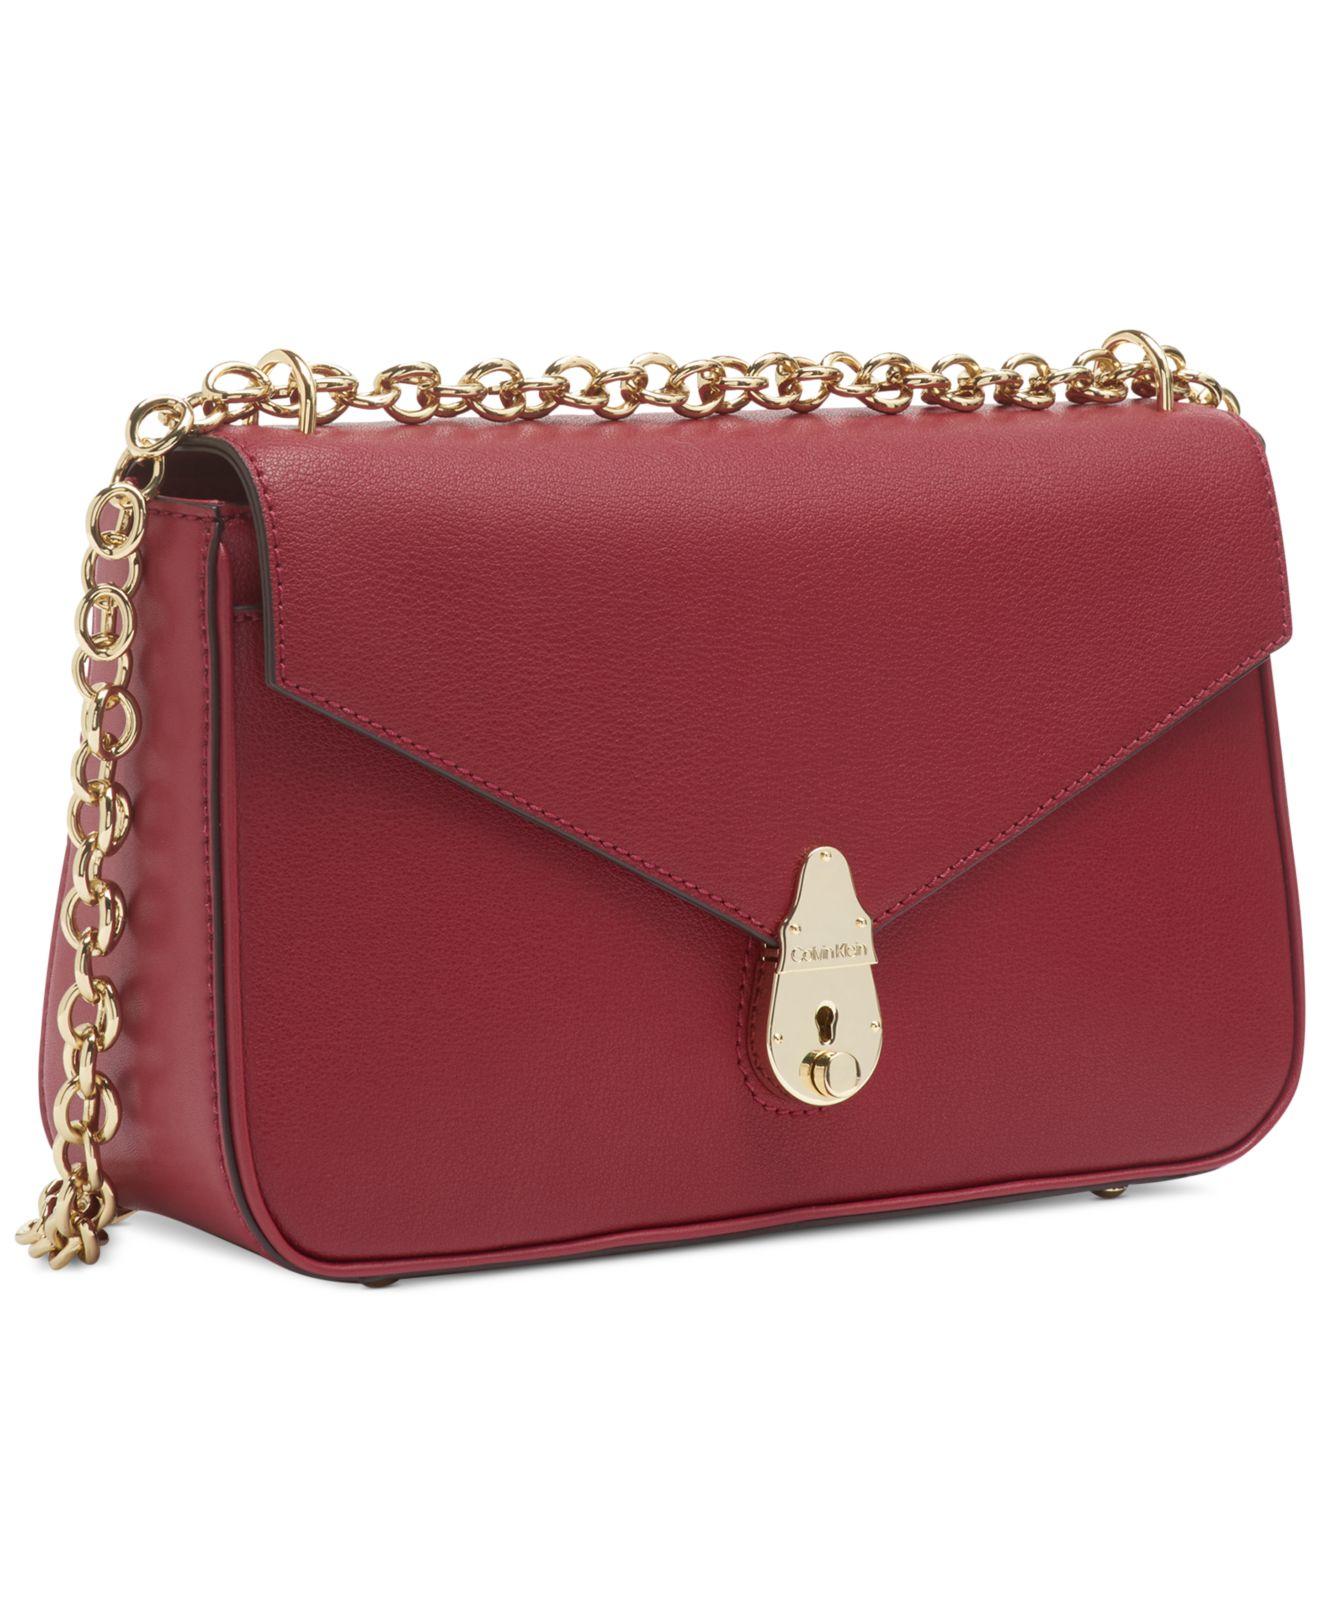 Calvin Klein Lock Leather Shoulder Bag in Red - Lyst